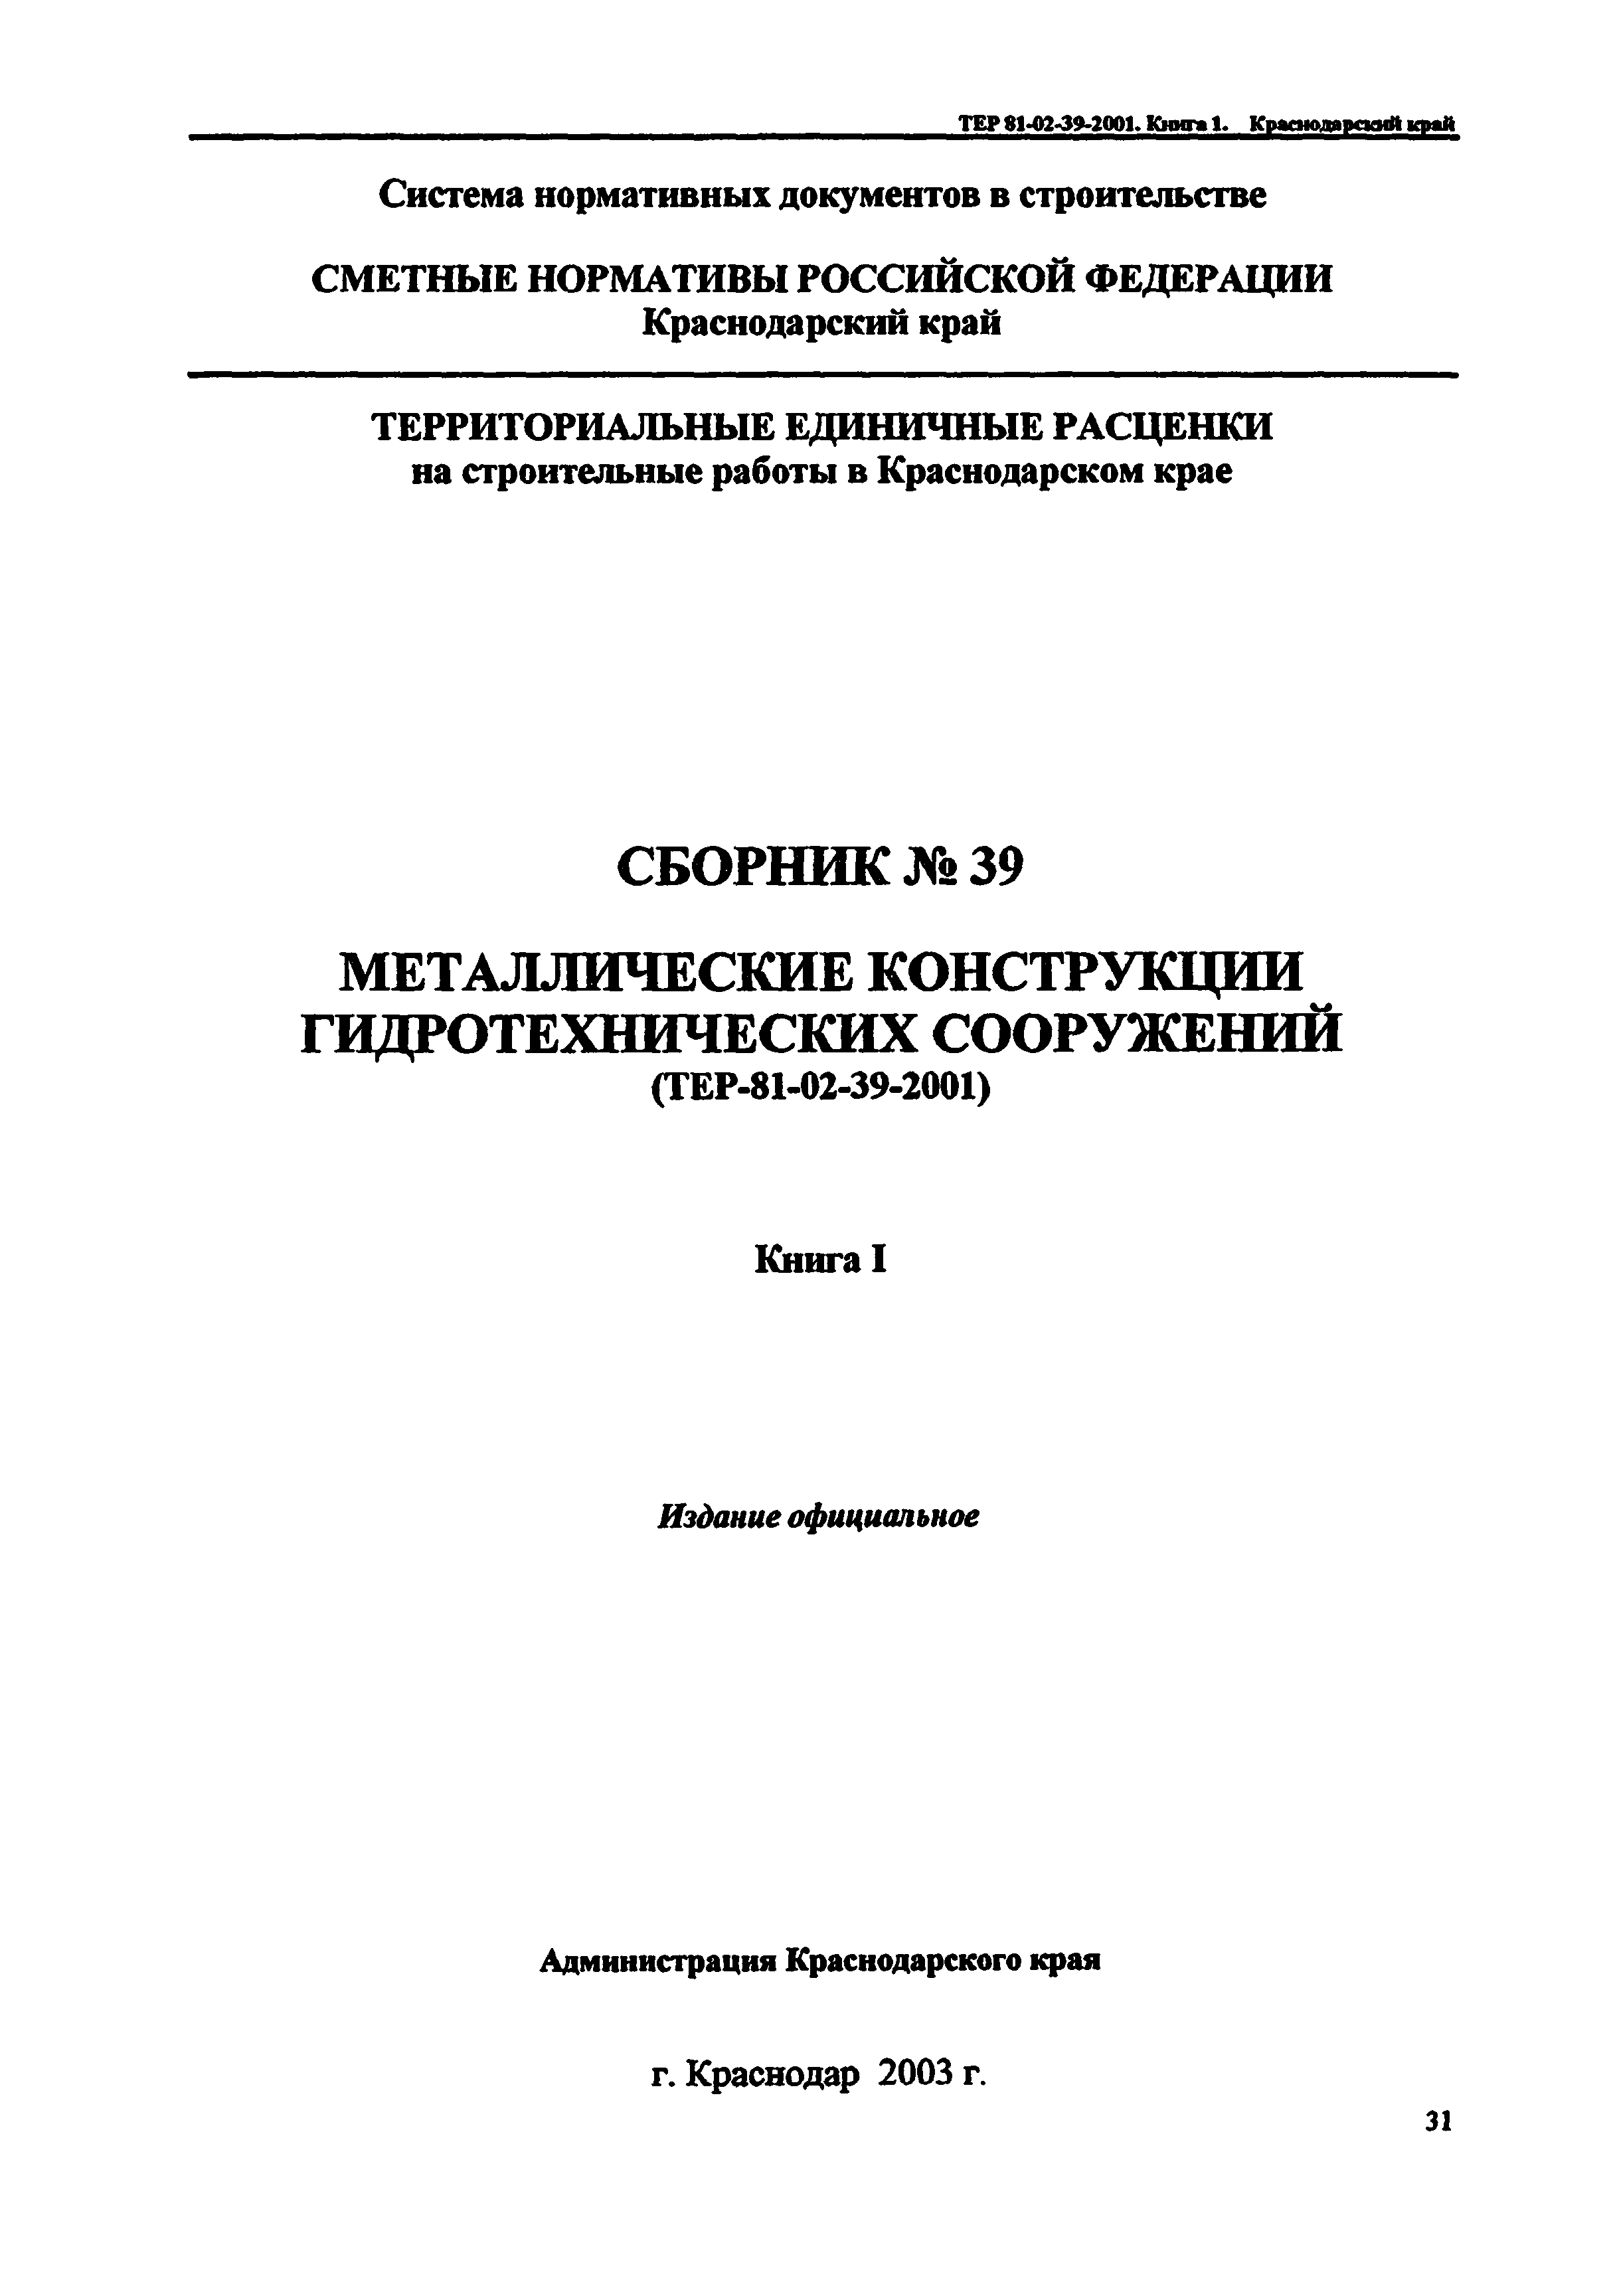 ТЕР Краснодарский край 2001-39